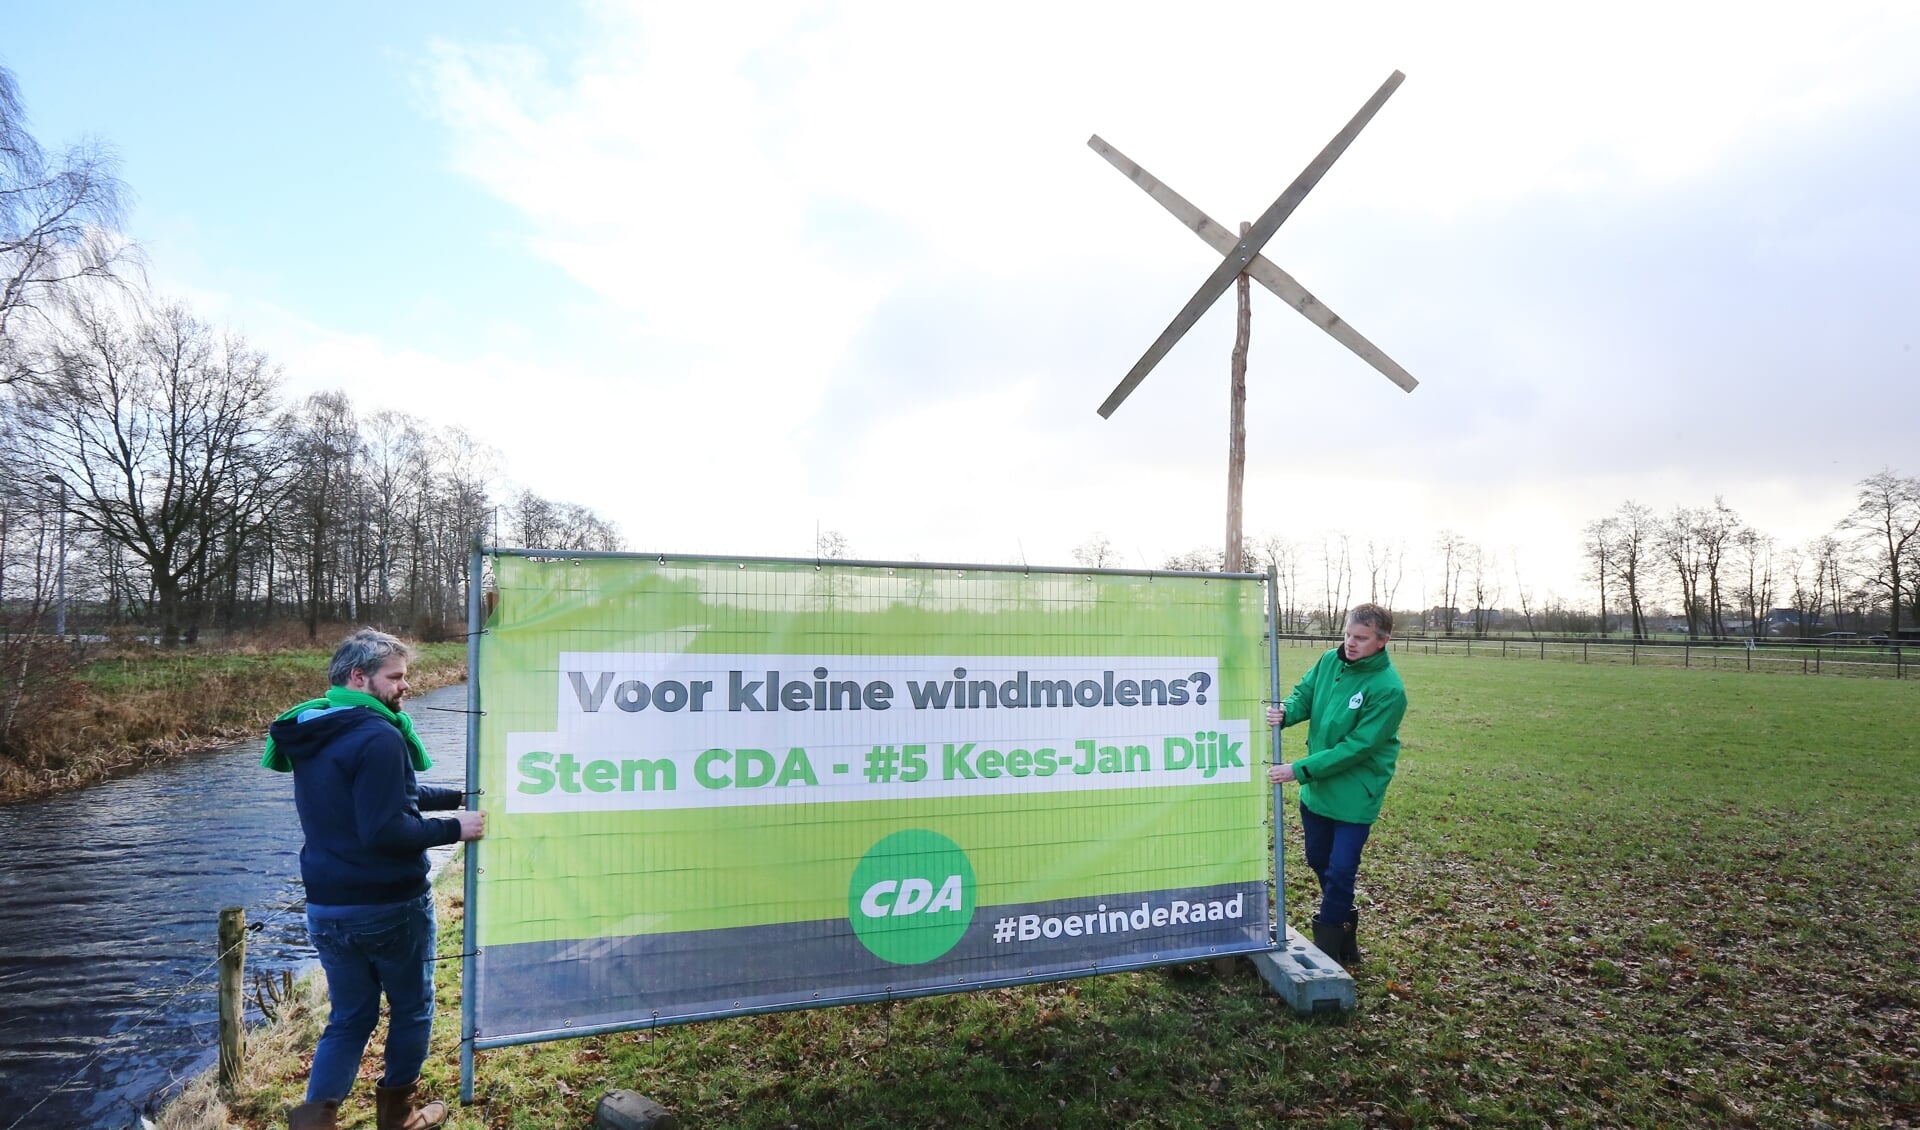 CDA Opsterland en de windmolens 